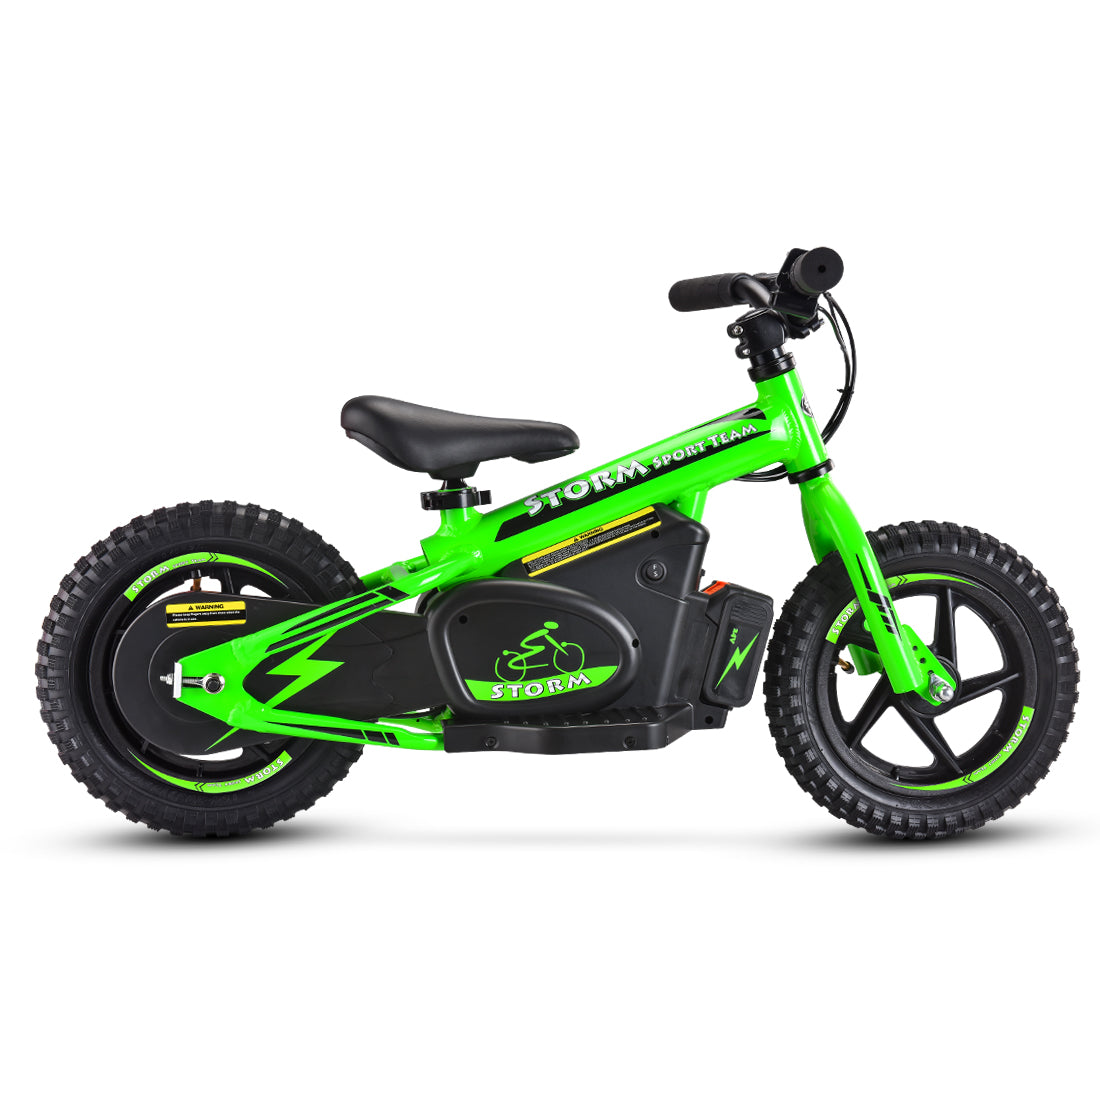 Storm Kids 100w 12" Electric Balance Bike - Green